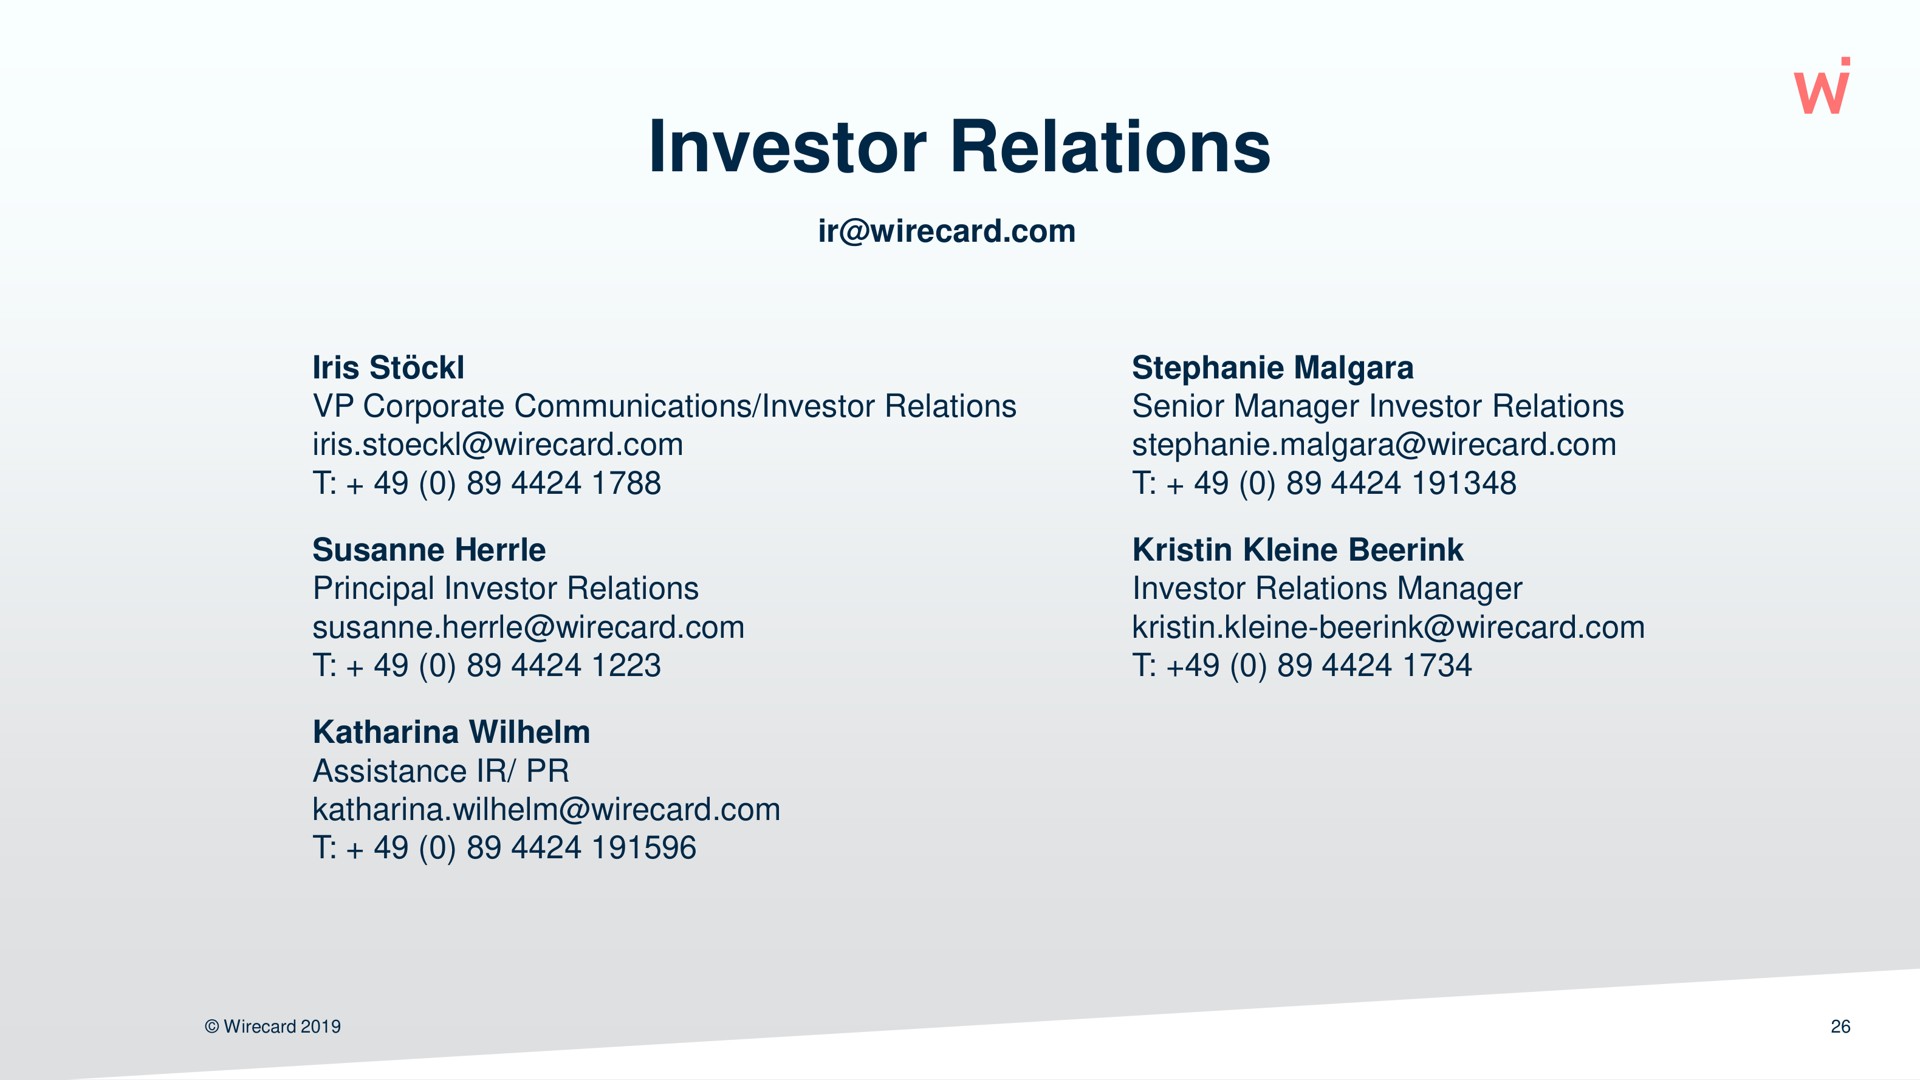 investor relations | Wirecard